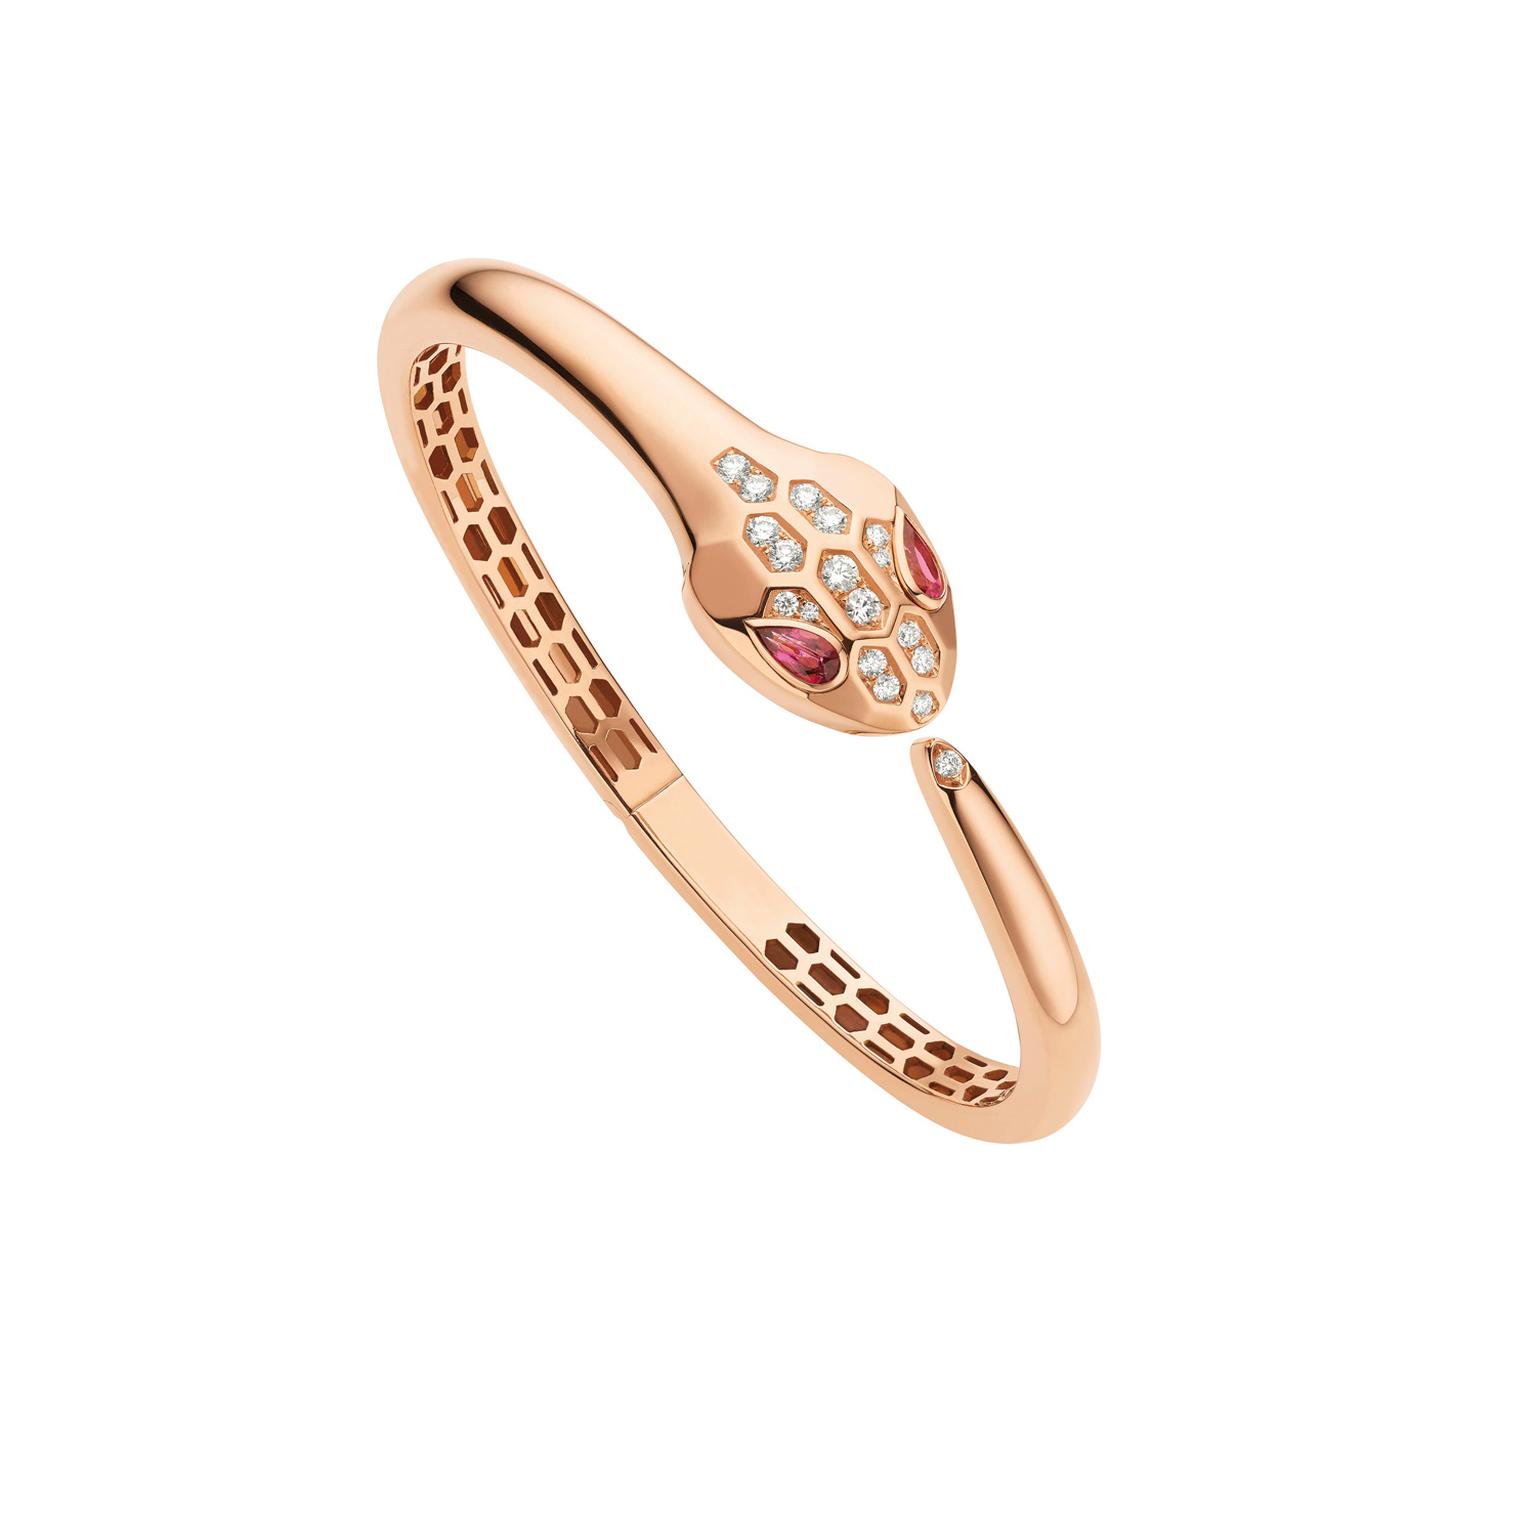 Bulgari Serpenti Seduttori bracelet in rose gold with rubellites